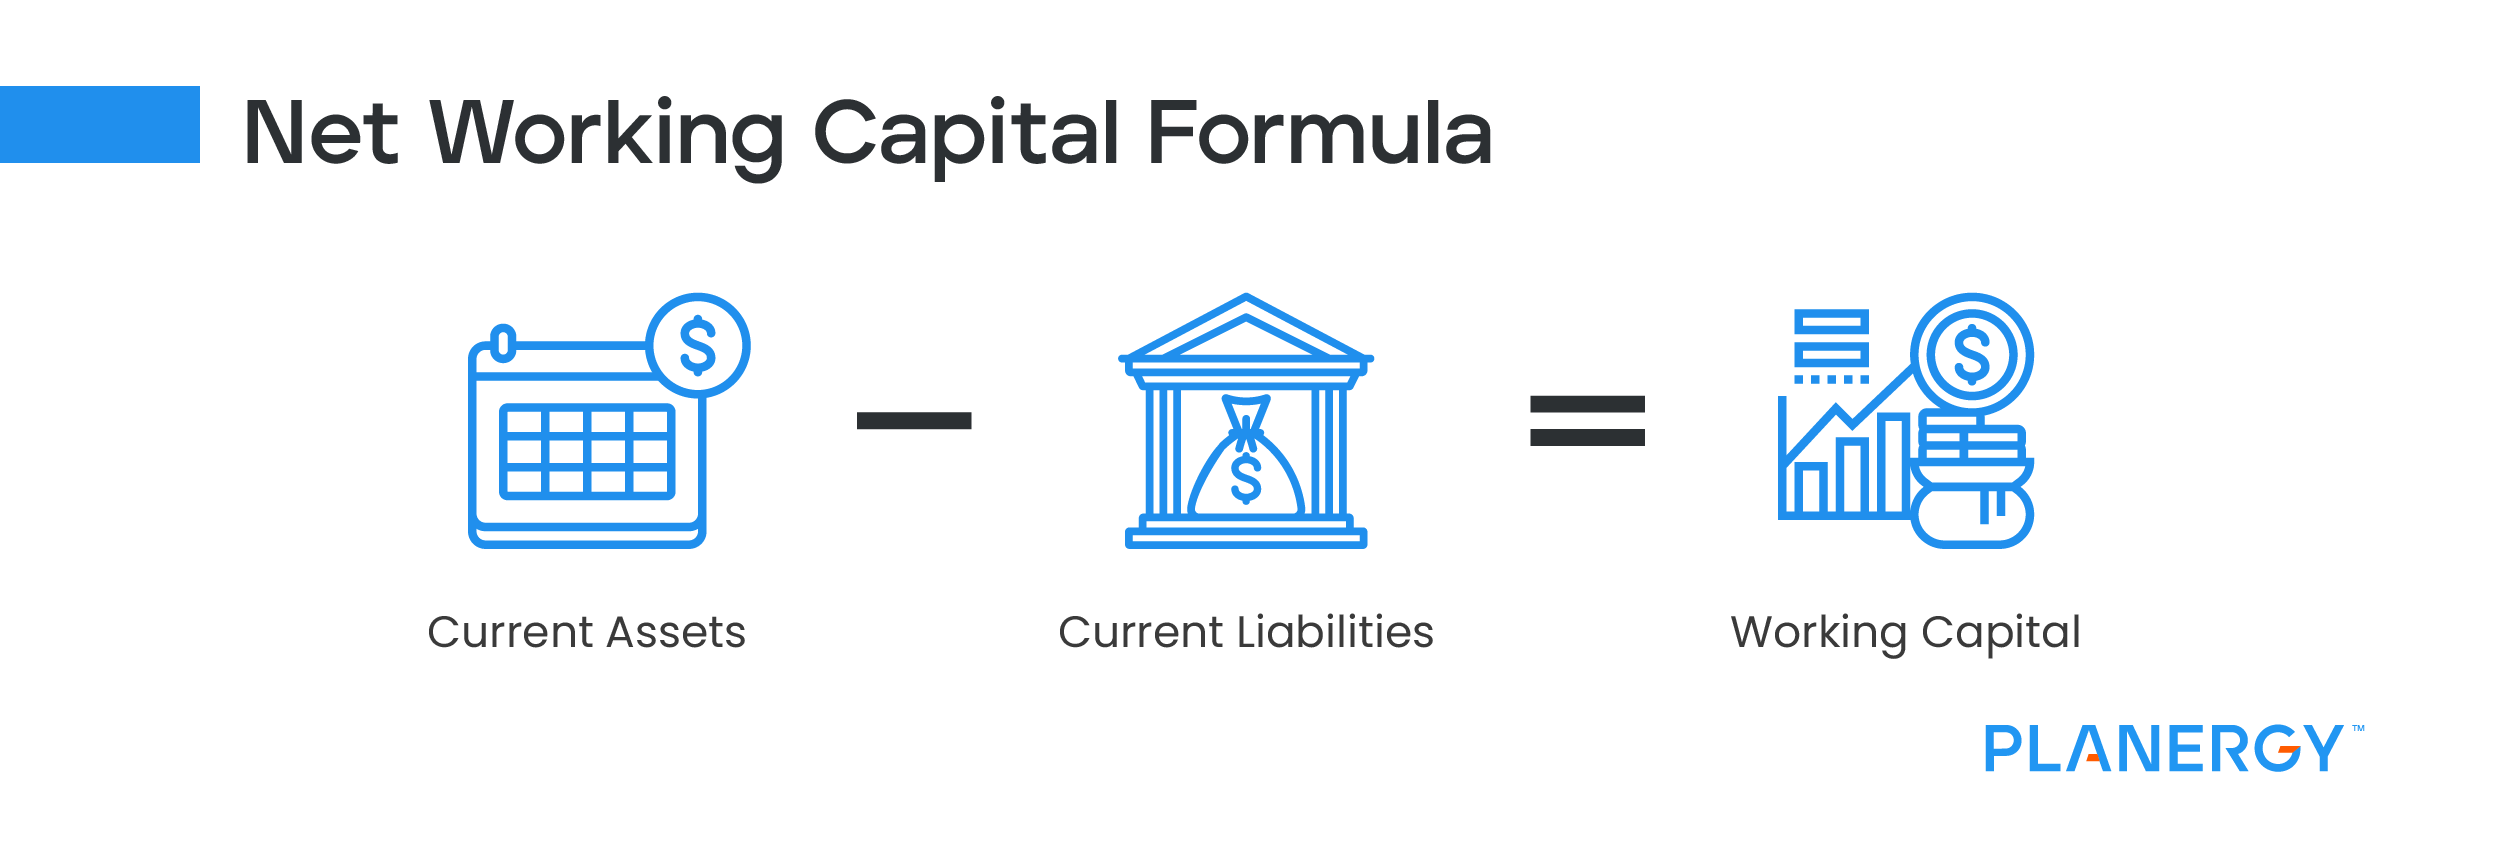 Net Working Capital Formula